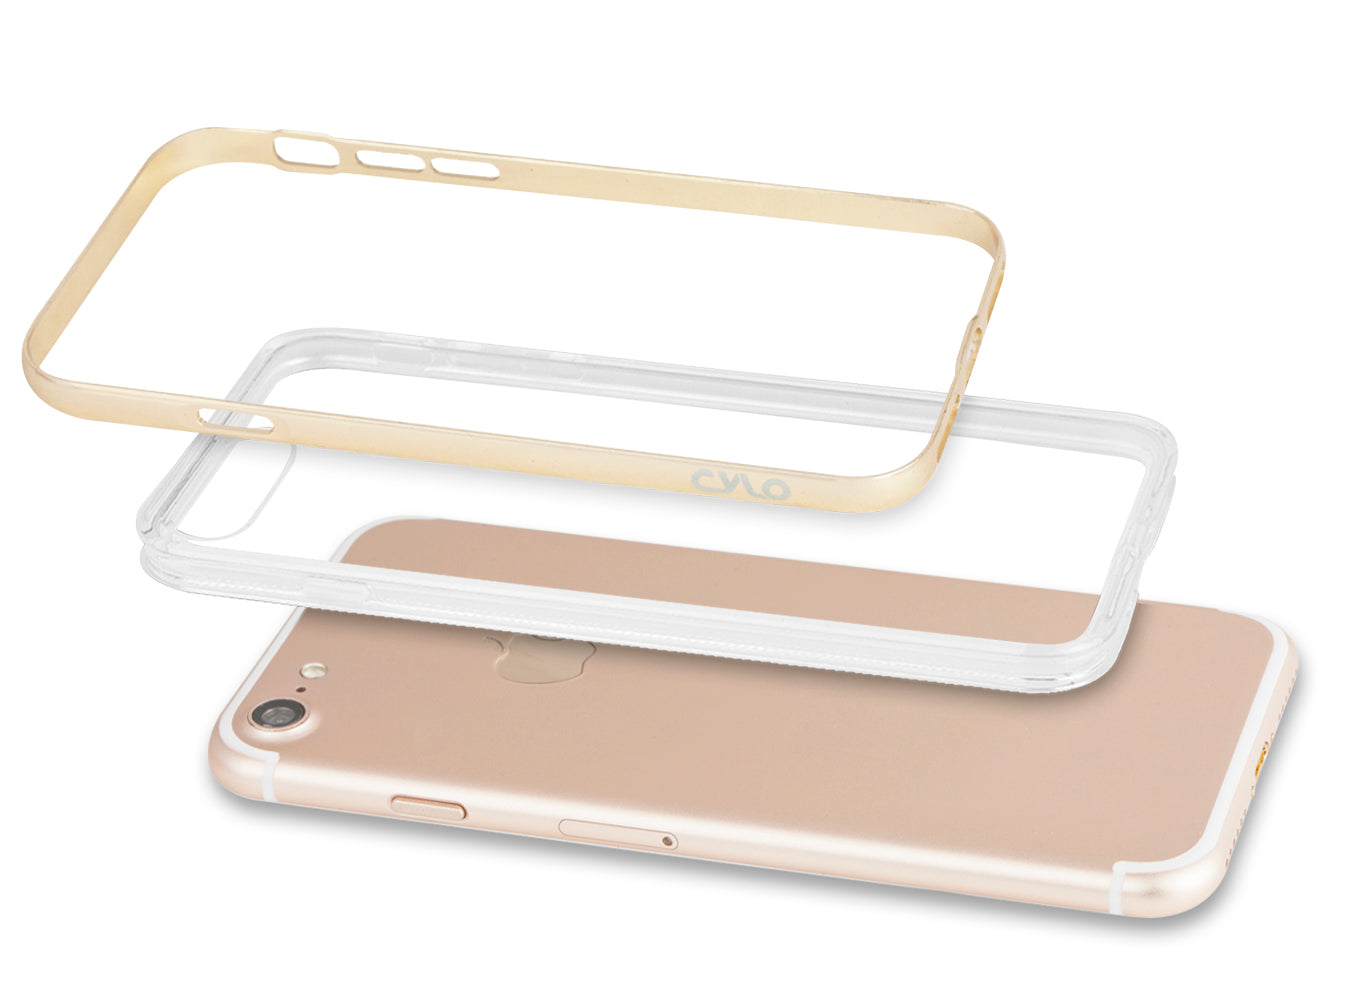 Cylo Metallic Drop Shield iPhone 7 Case